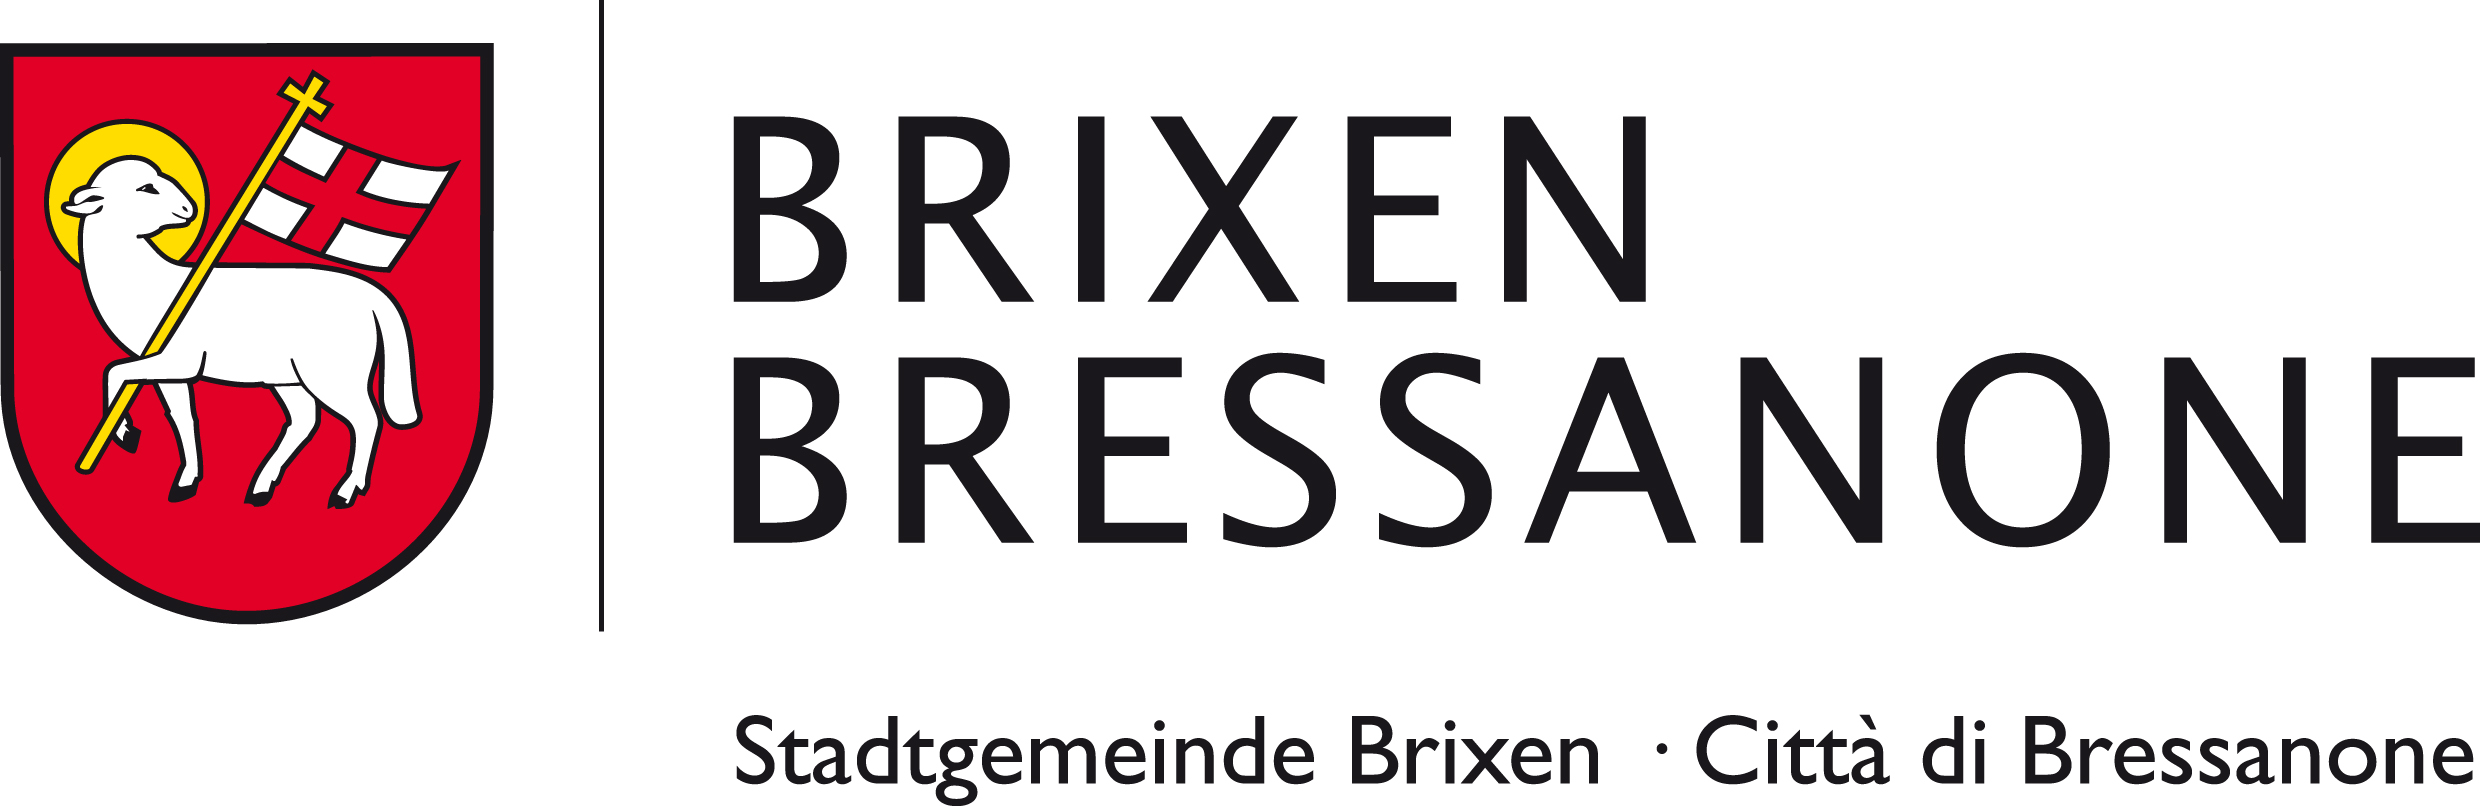 Brixen Gemeinde Logo+Claim-4c-10 Kopie.png